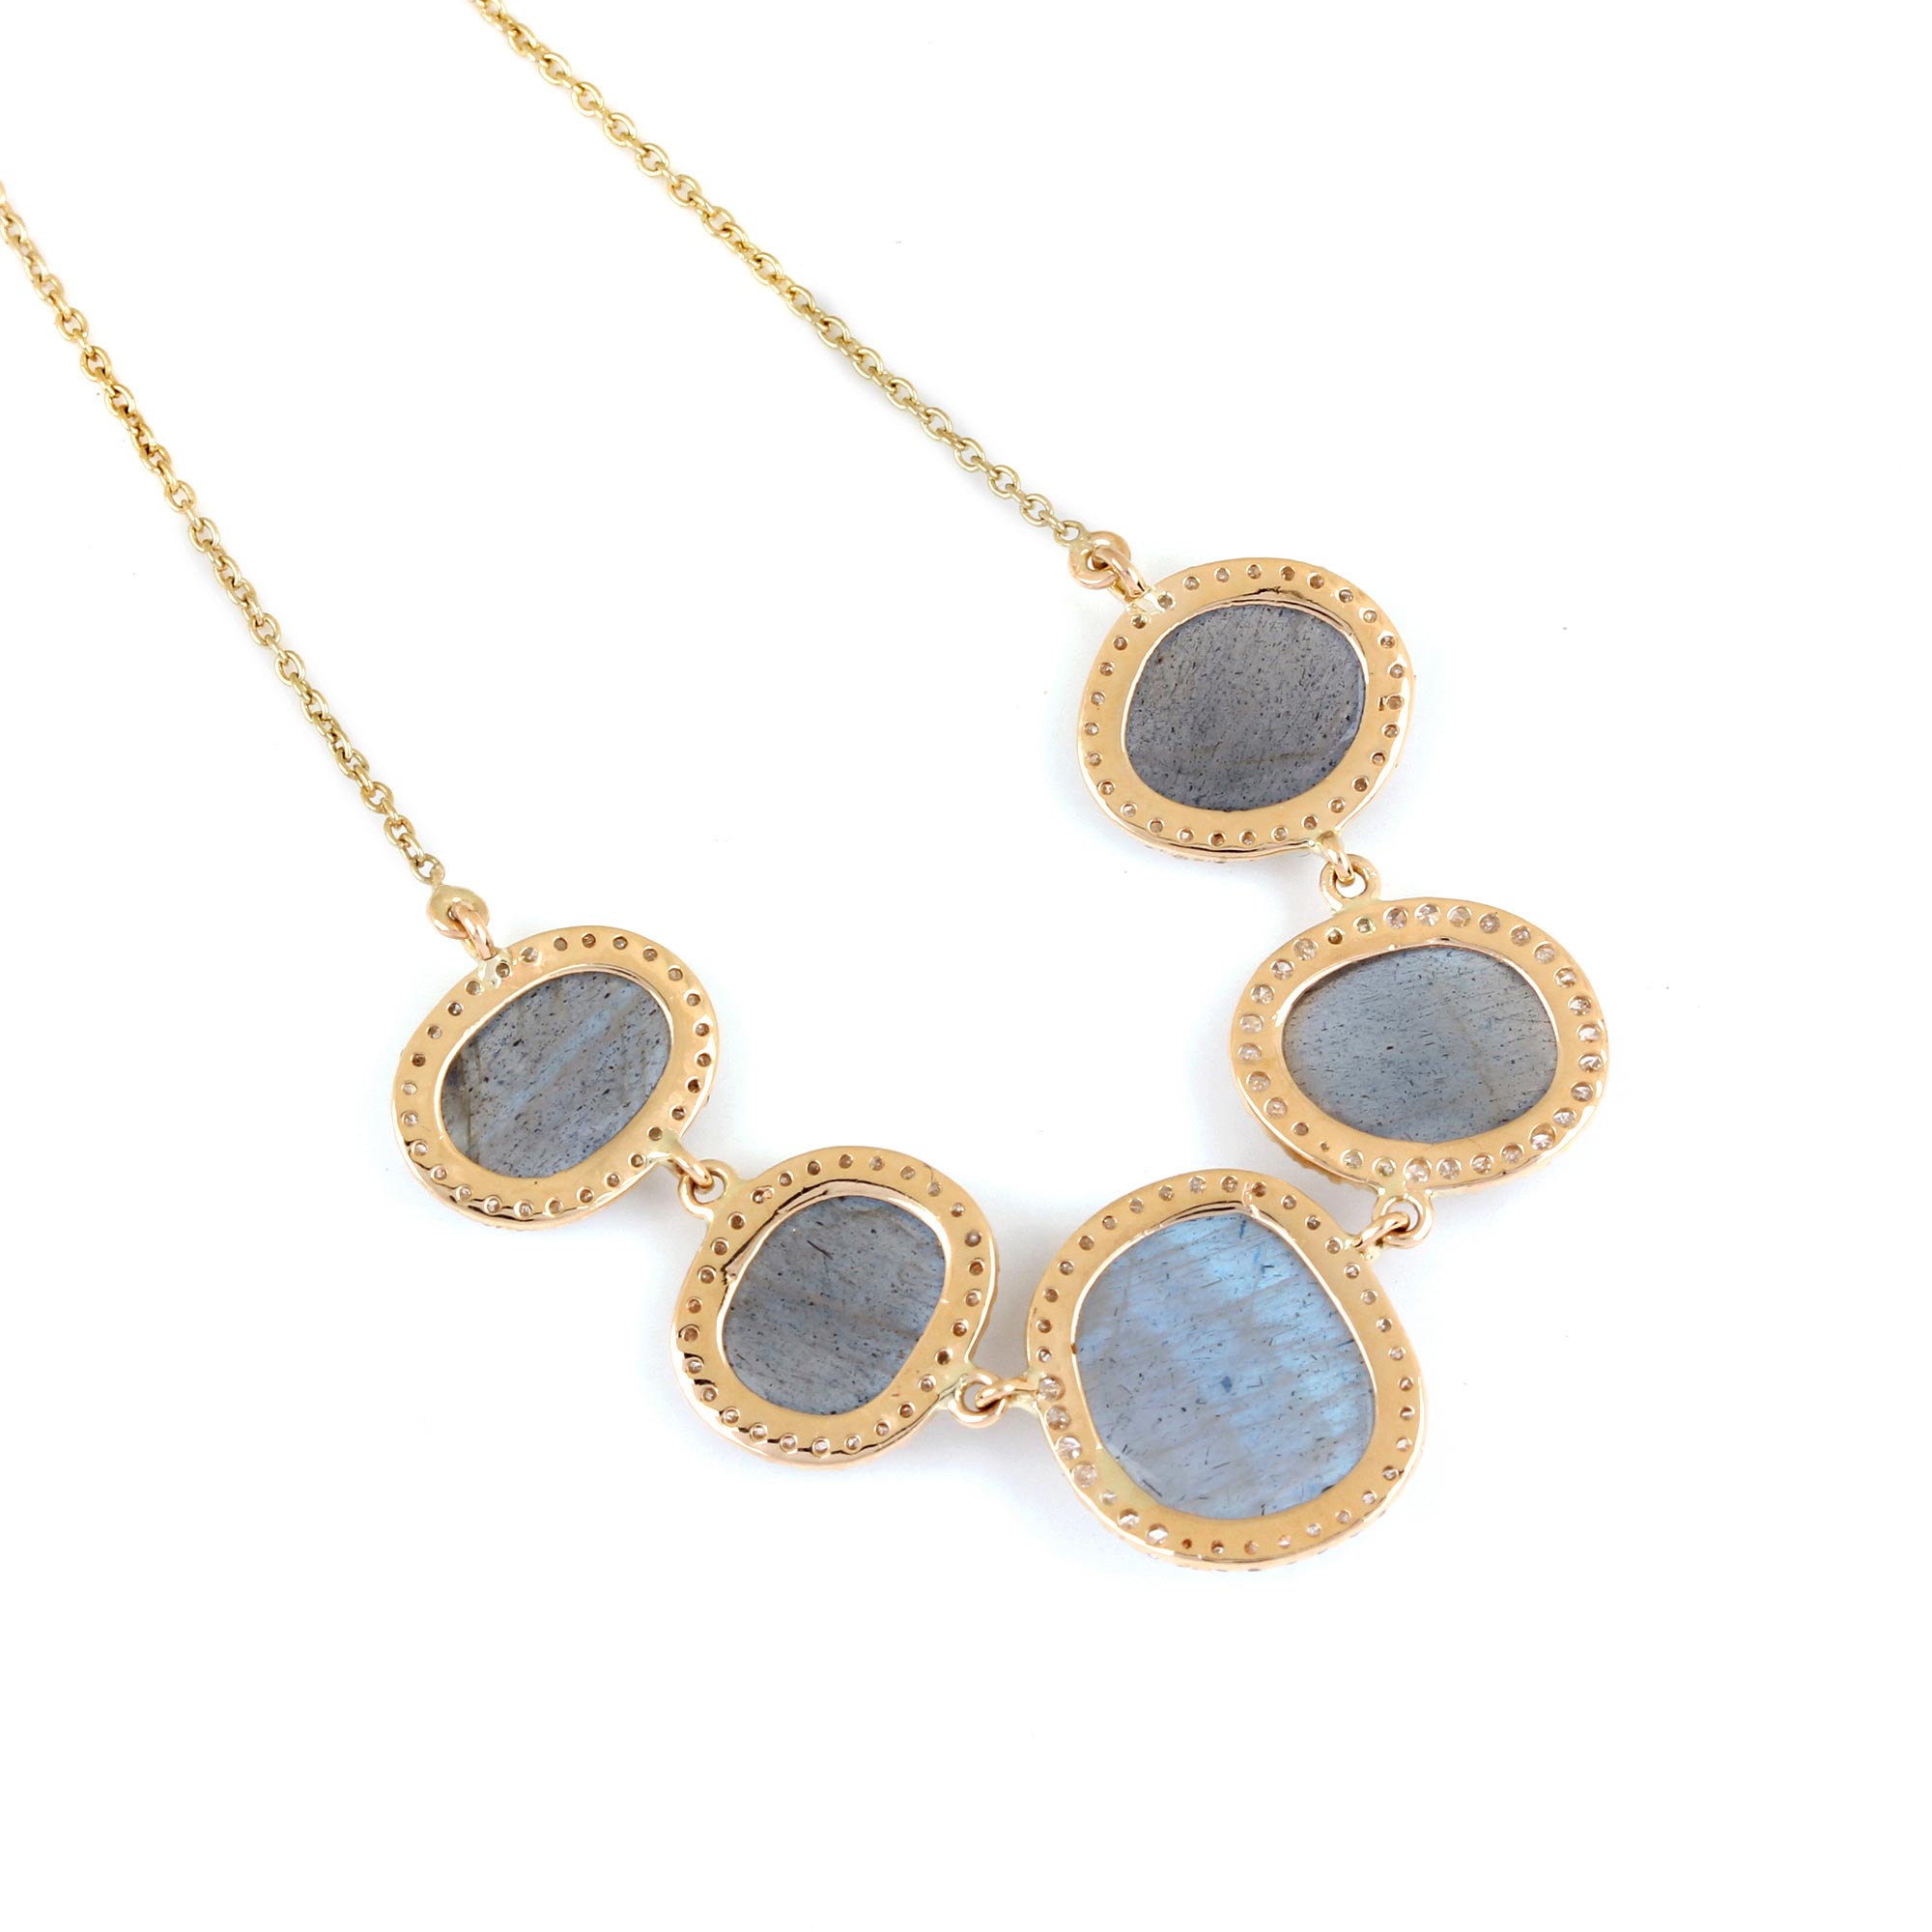 14K Solid Gold Labradorite Pendant Chain Necklace Pave Diamond Jewelry